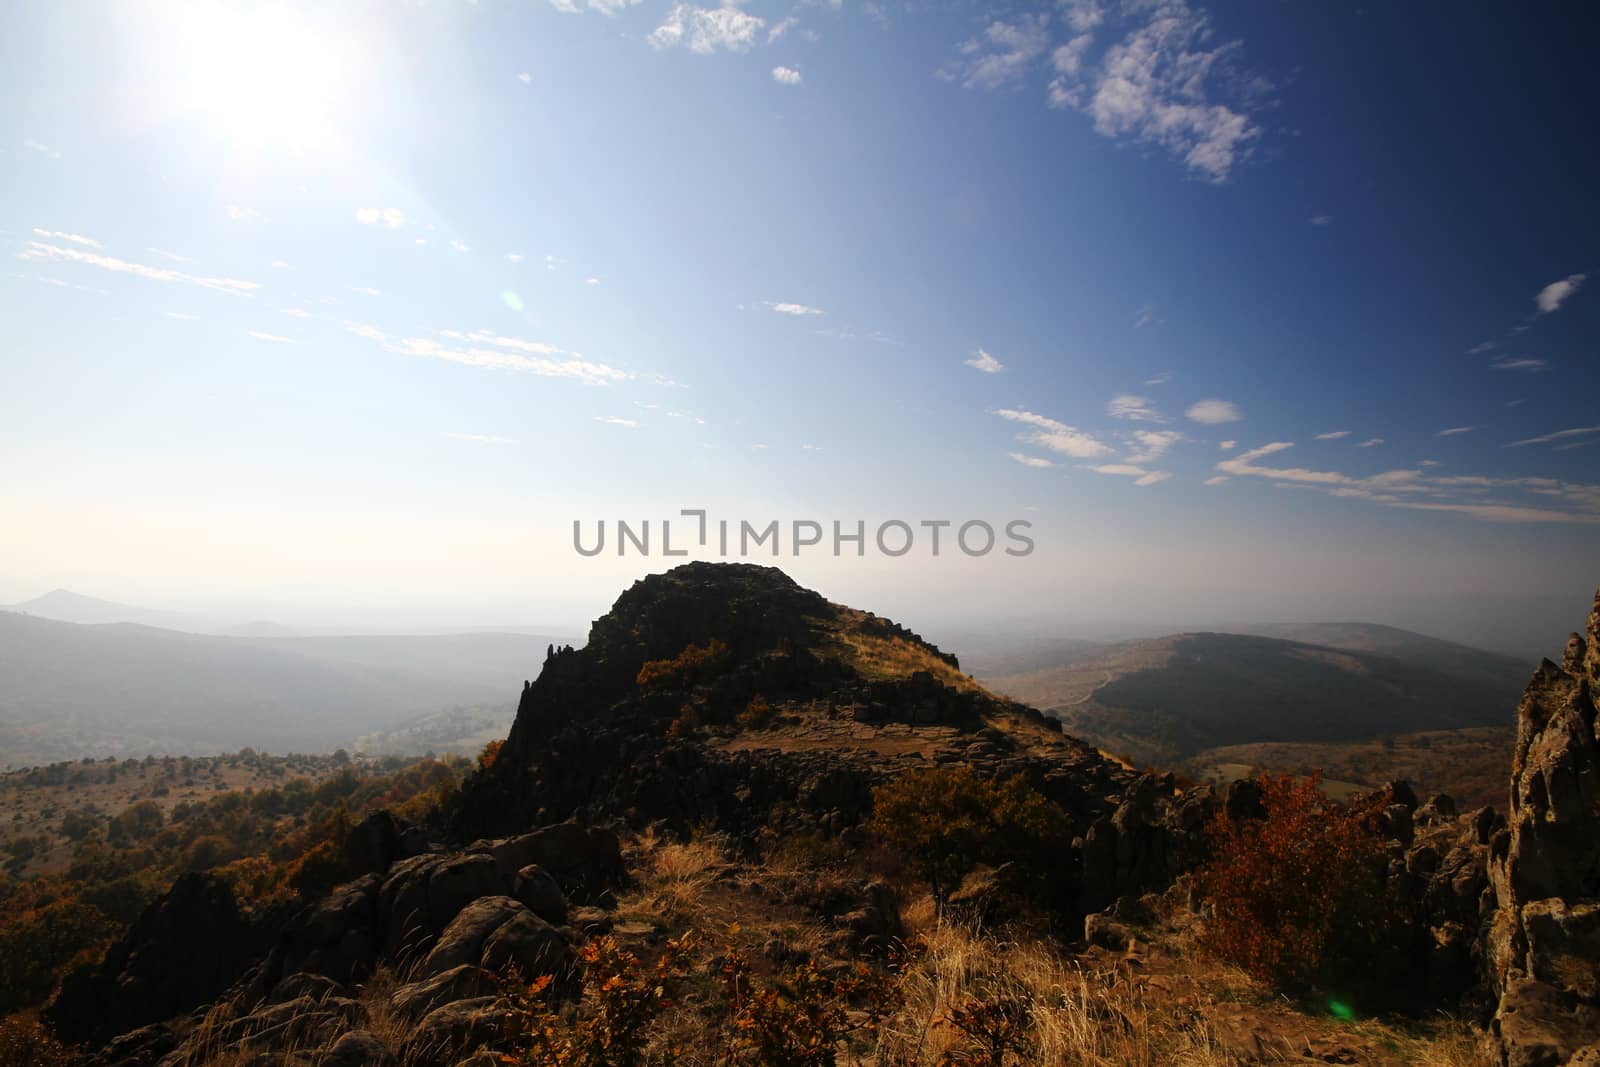 Kokino Megalythic Observatory near Kumanovo